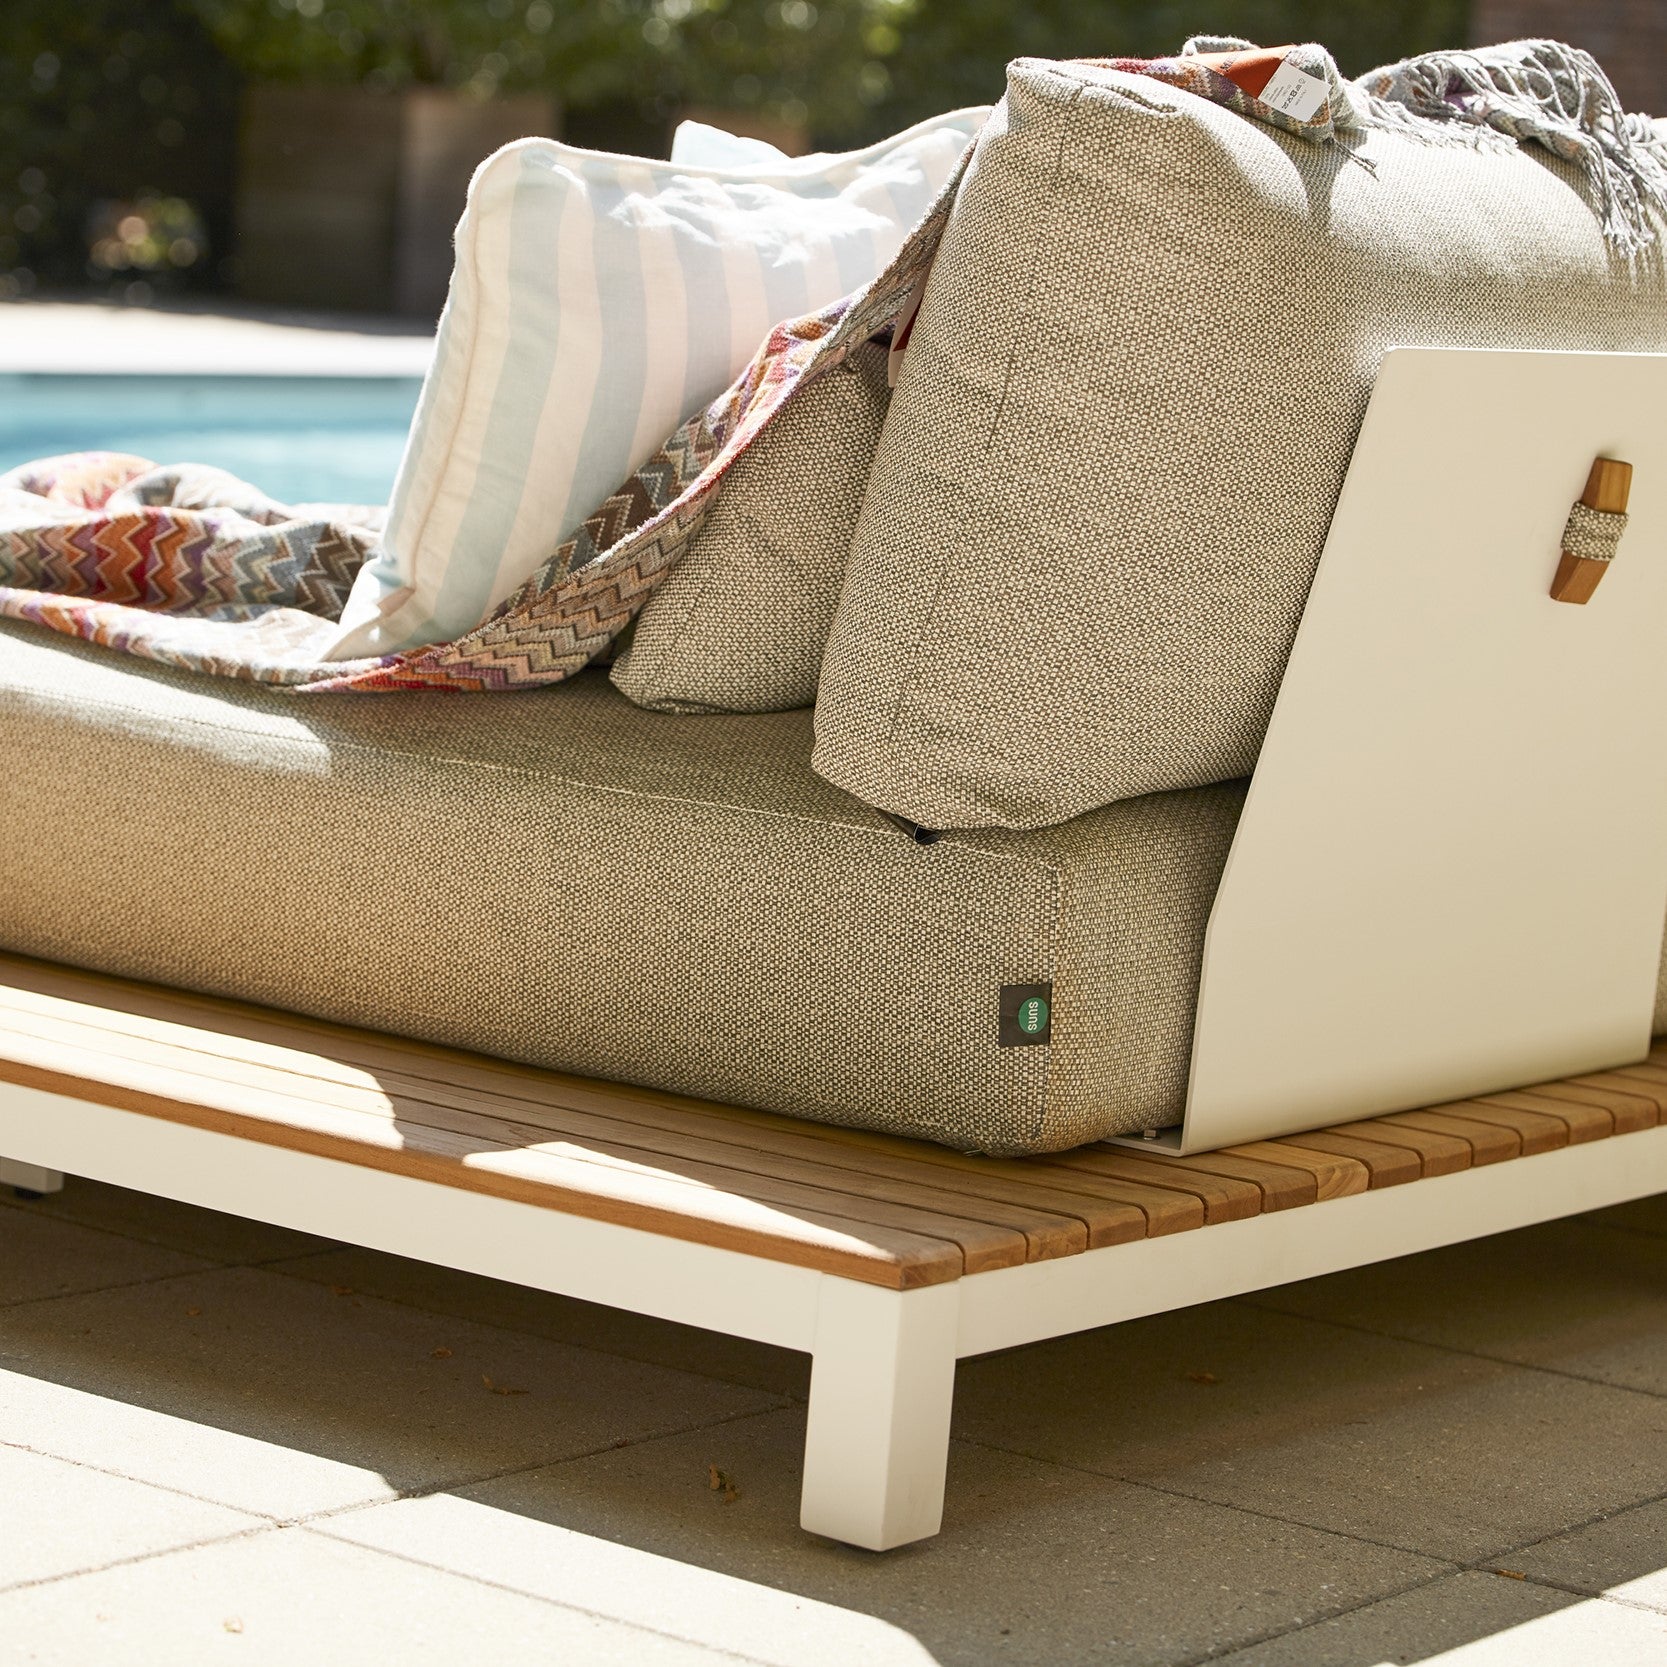 Suns Lifestyle - Portofino Chaise Lounge Collection